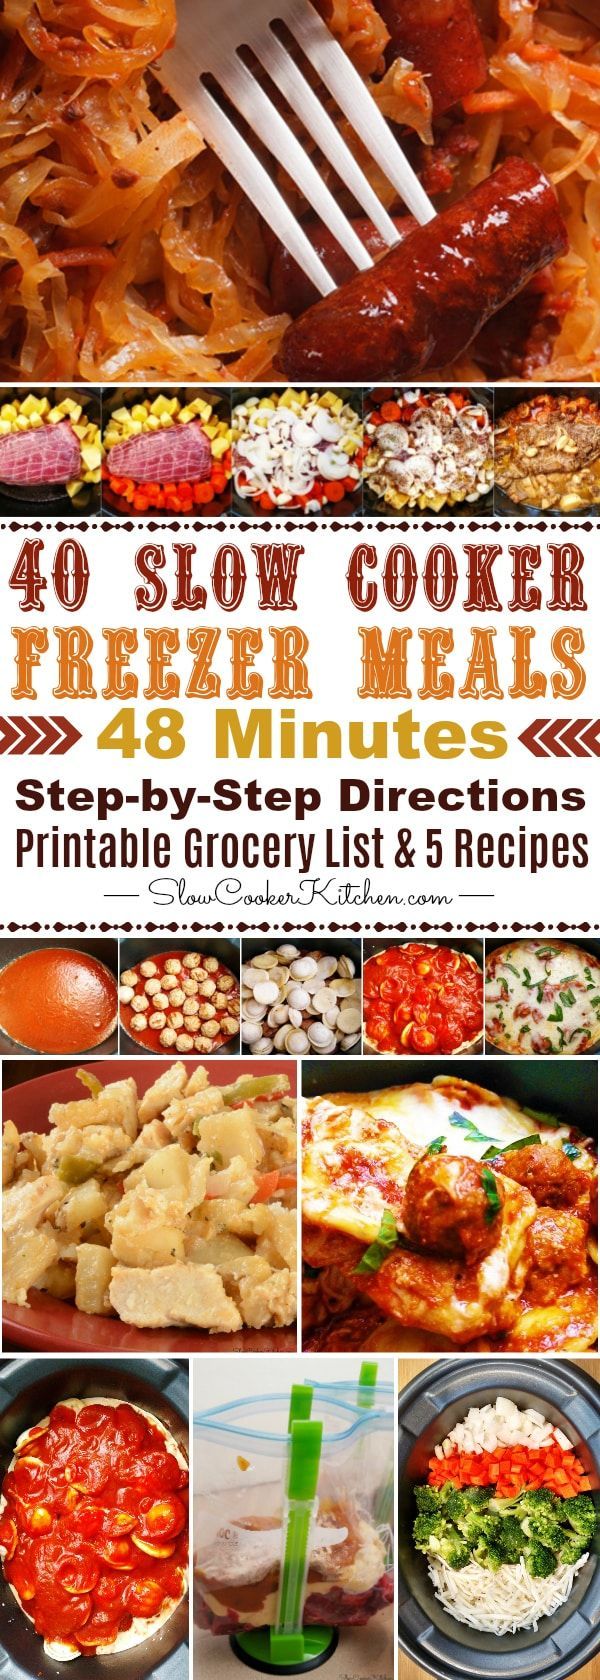 Easy Crock Pot Freezer Meals 1 Week in 48 Min | SlowCookerKitchen.com -   18 healthy recipes For School crock pot ideas